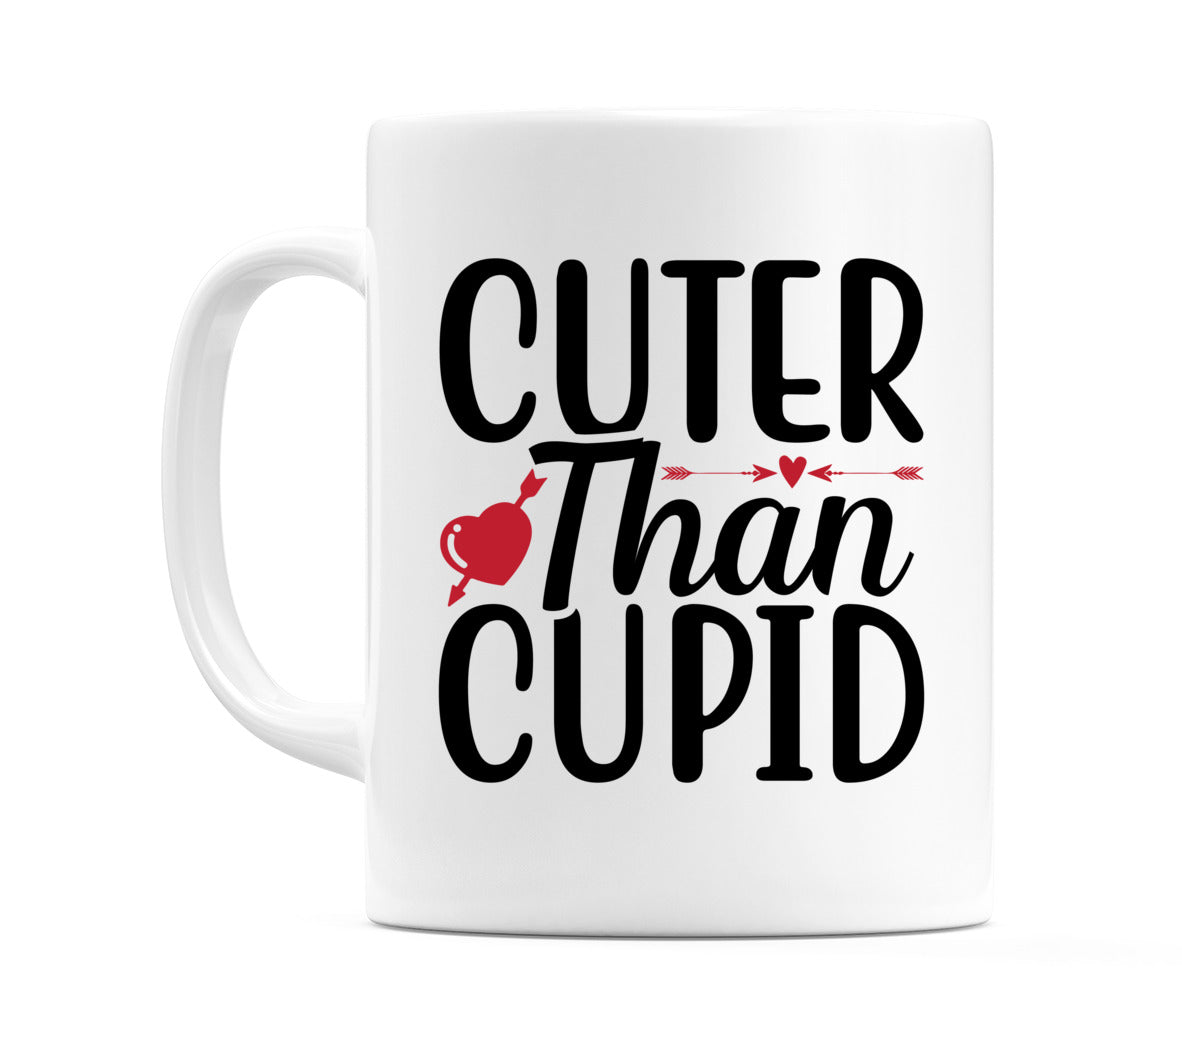 Cuter than cupid Mug